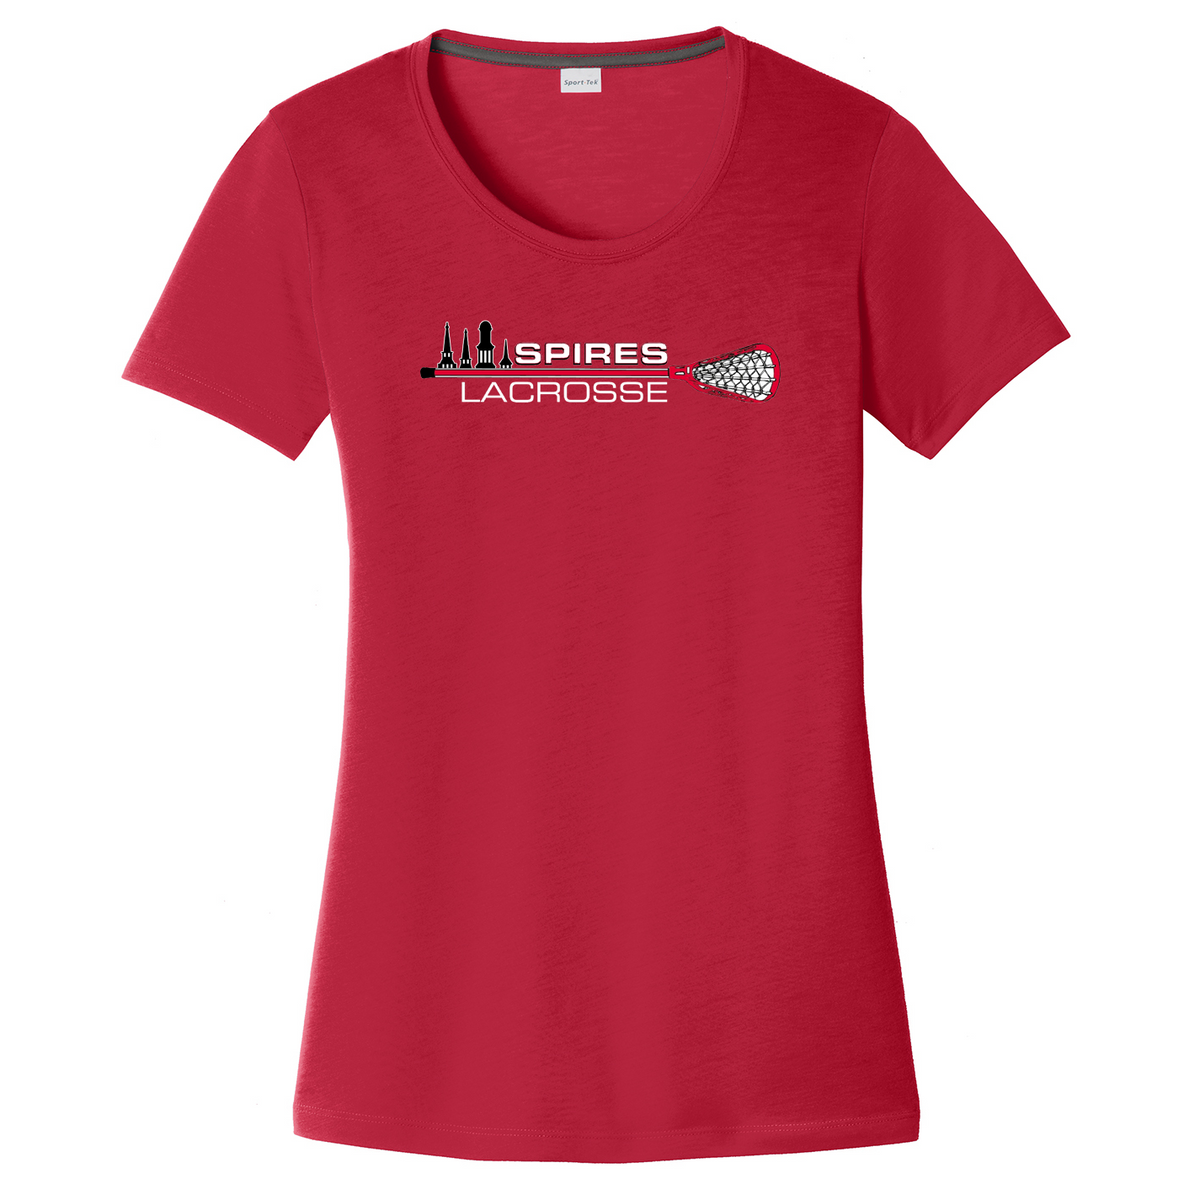 Spires Lacrosse Women's CottonTouch Performance T-Shirt